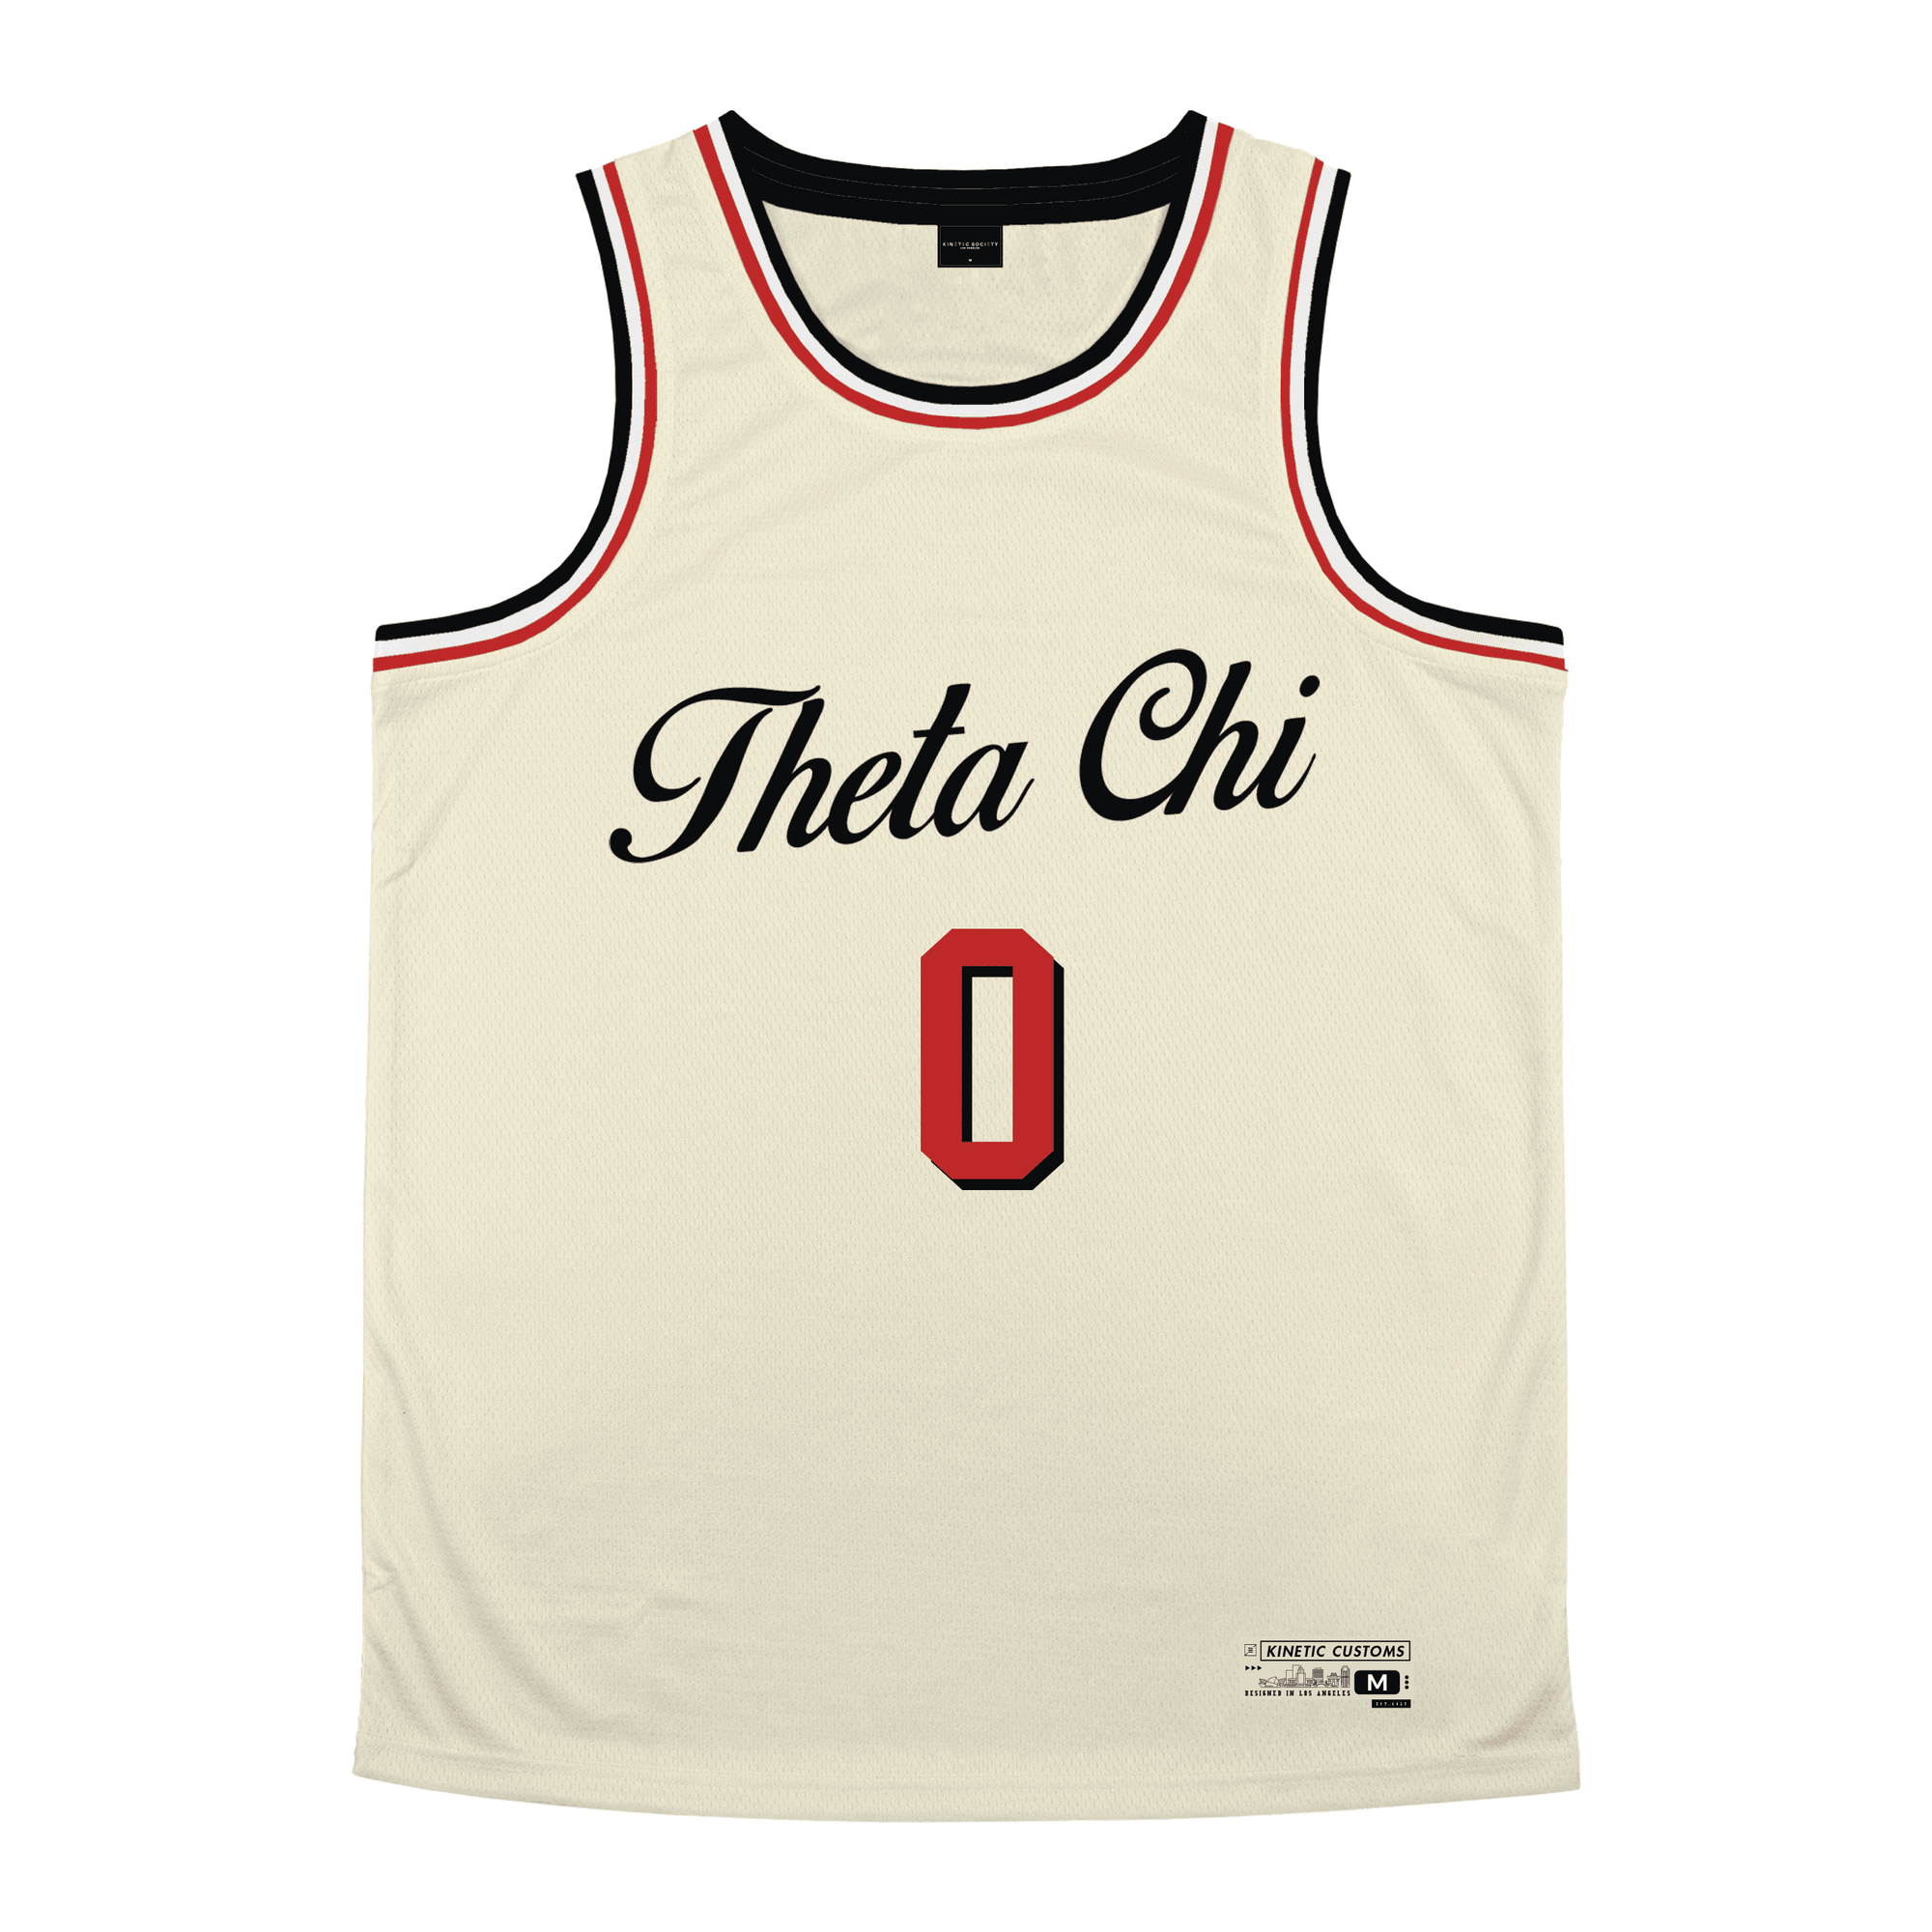 Theta Chi - VIntage Cream Basketball Jersey